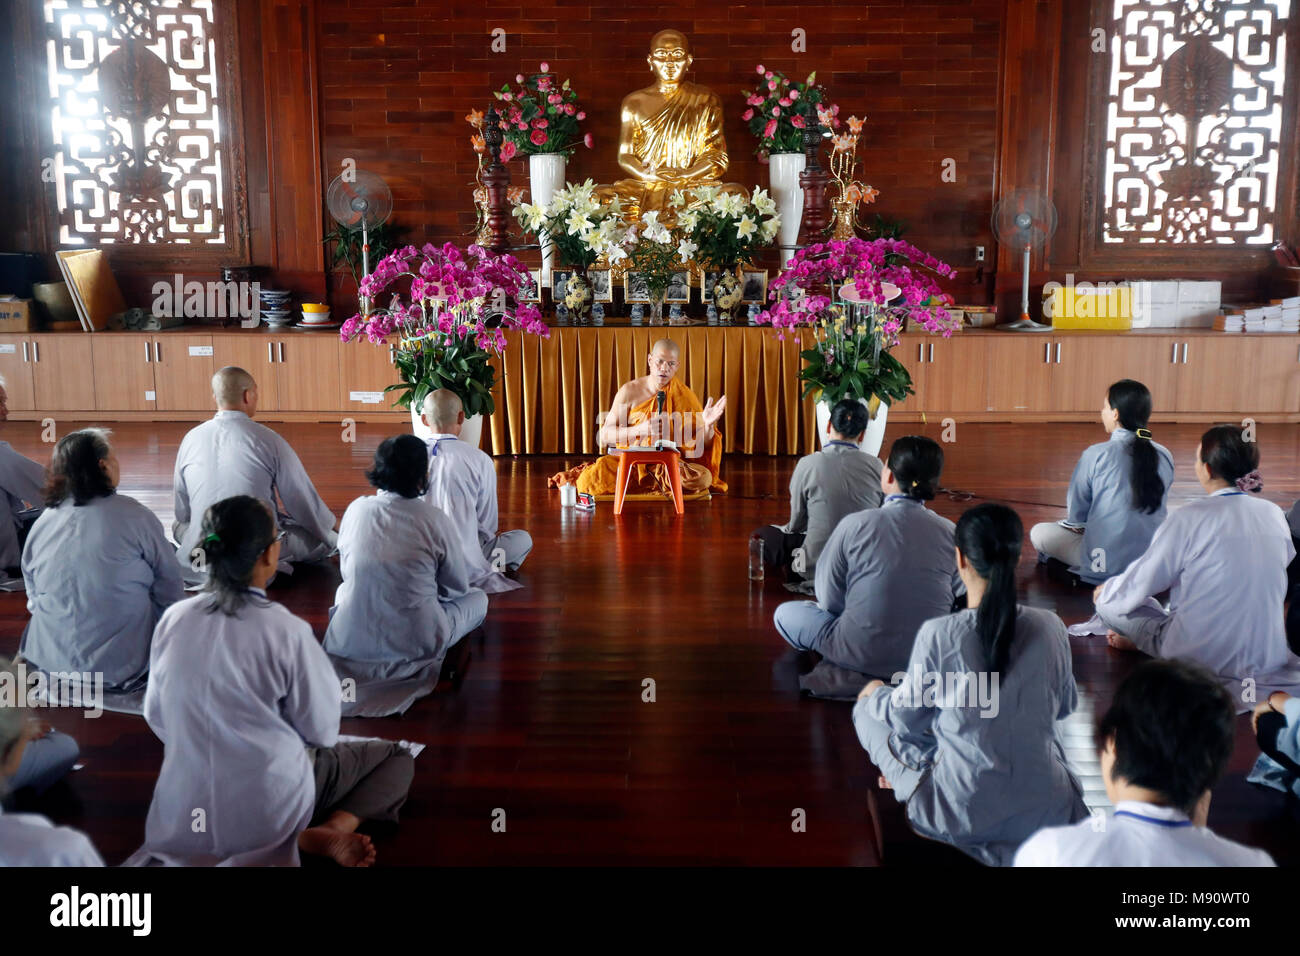 Dang Quang Minh templo budista. Un profesor encarga a un grupo de personas cómo recitar cánticos budistas. Ho Chi Minh city. Vietnam. Foto de stock